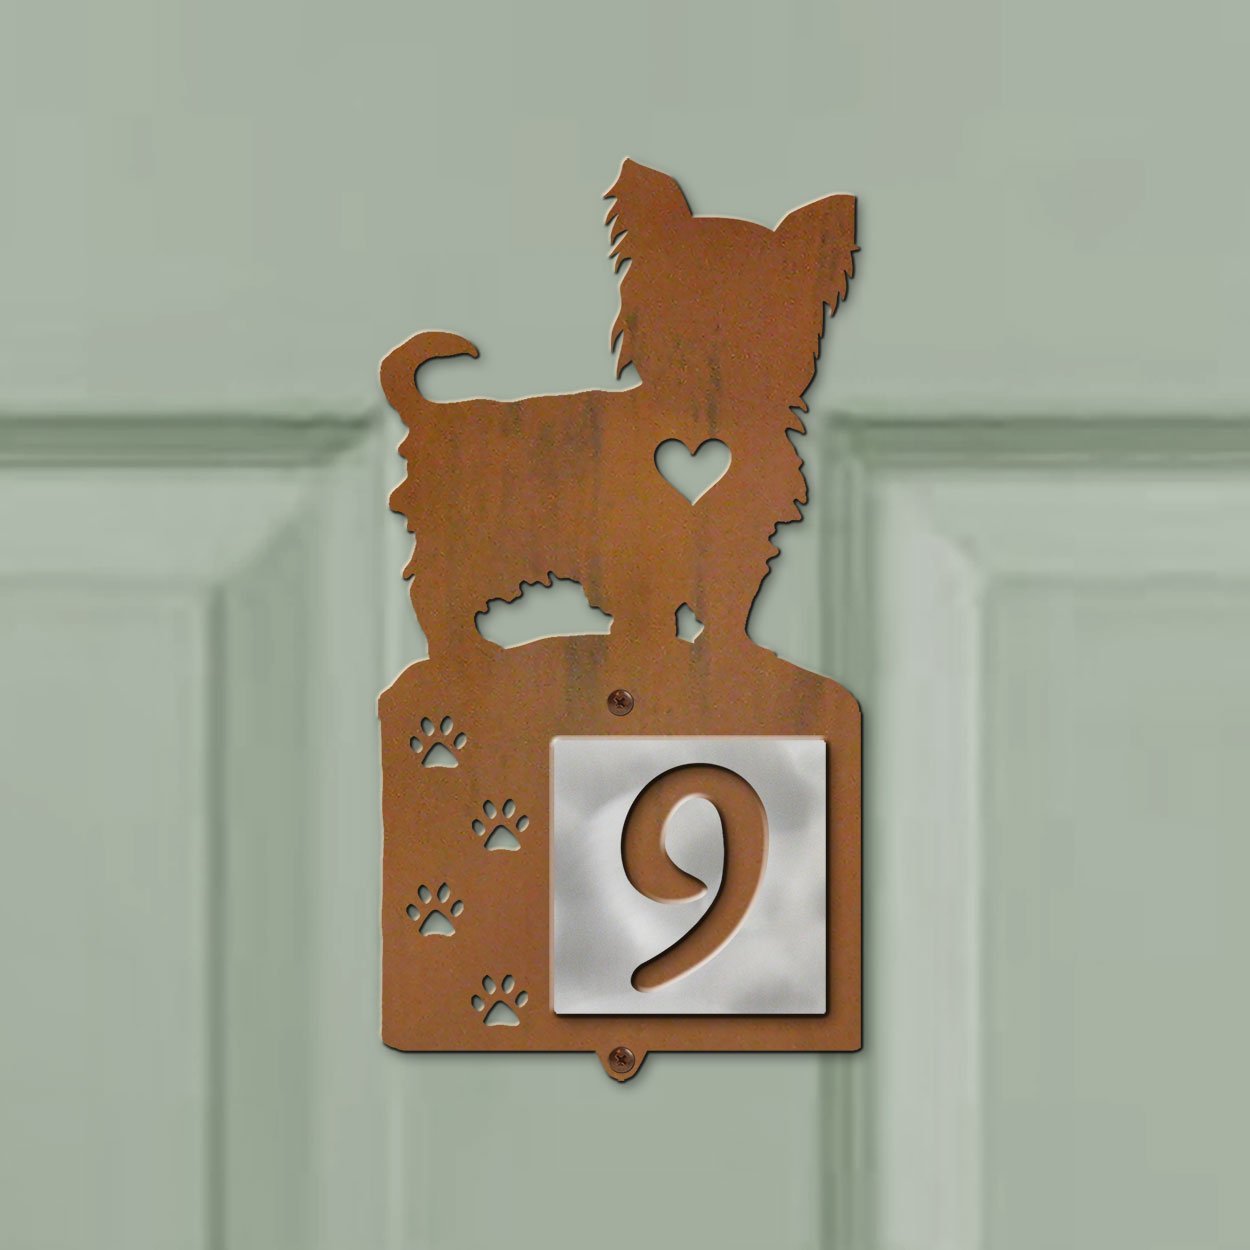 606321 - Yorkie Nose Prints One-Digit Rustic Tile Door Number